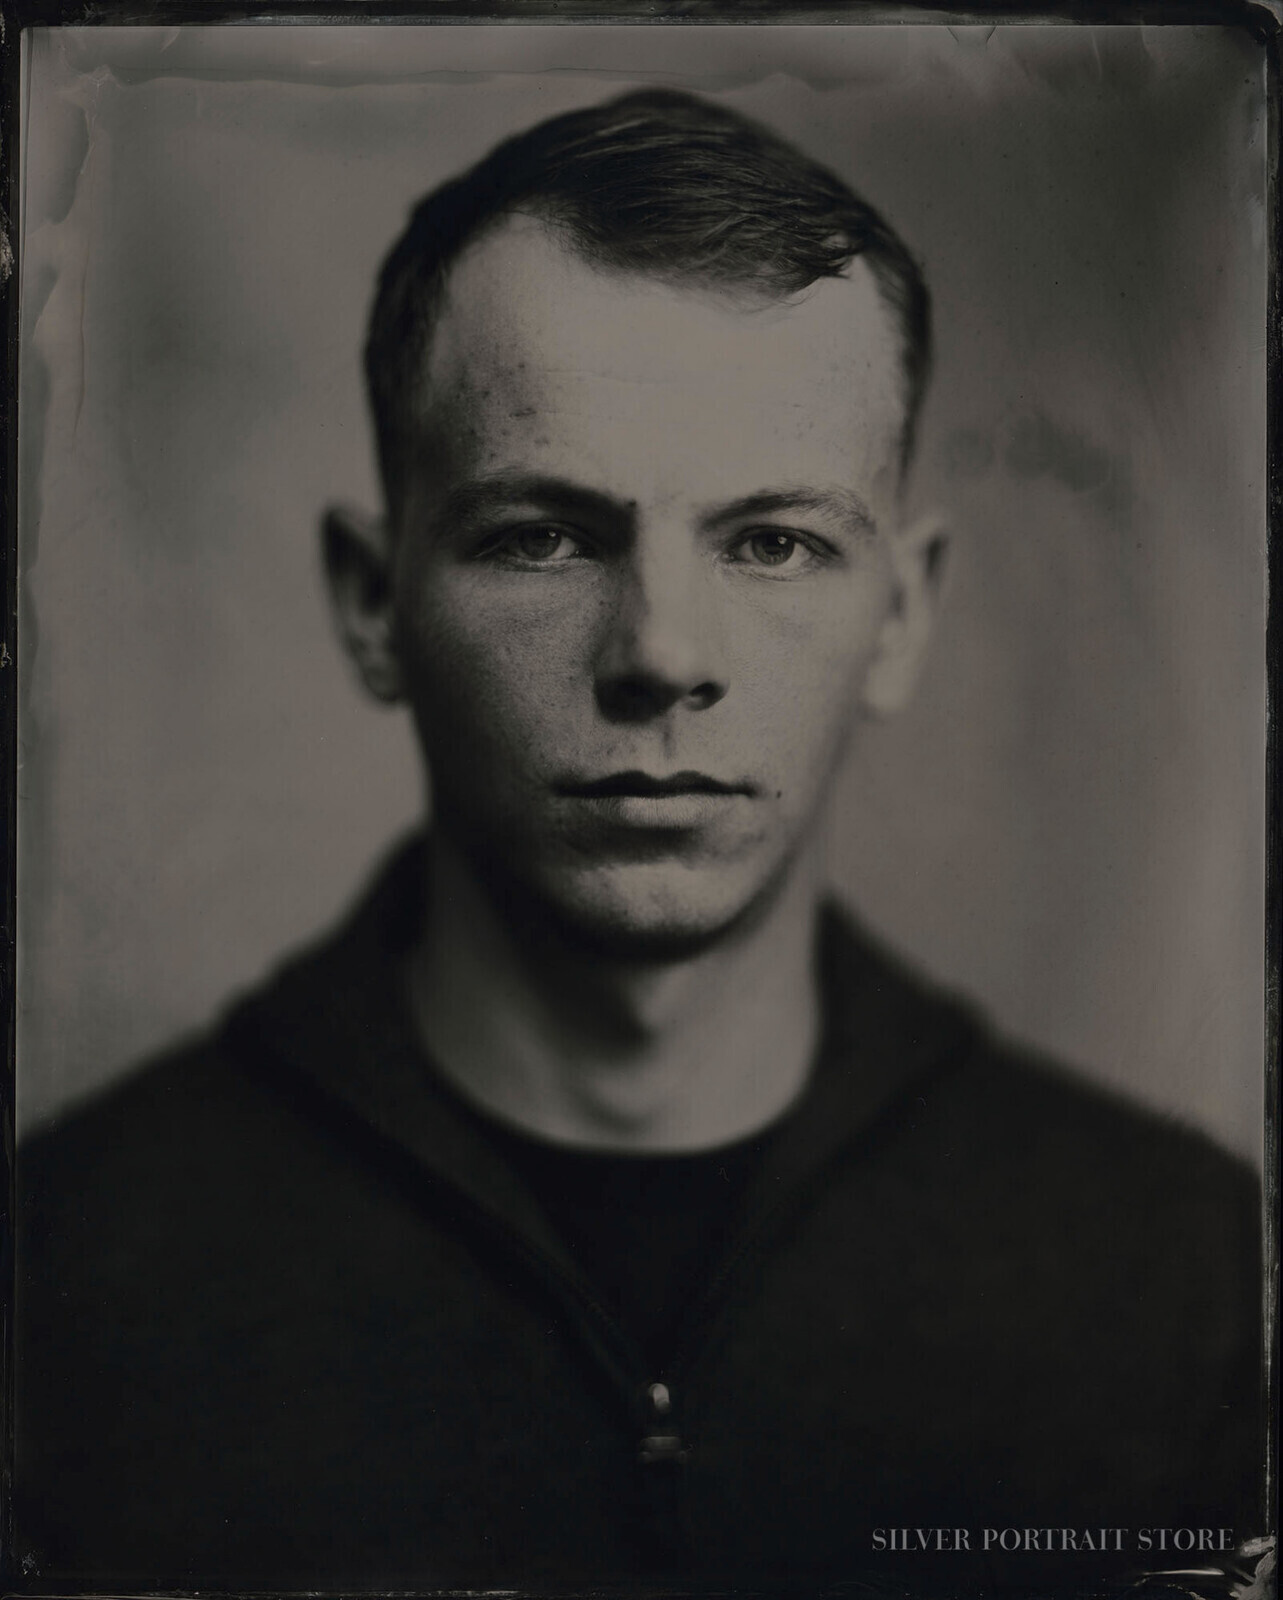 Martijn-Silver Portrait Store-Wet plate collodion-Tintype 20 x 25 cm.